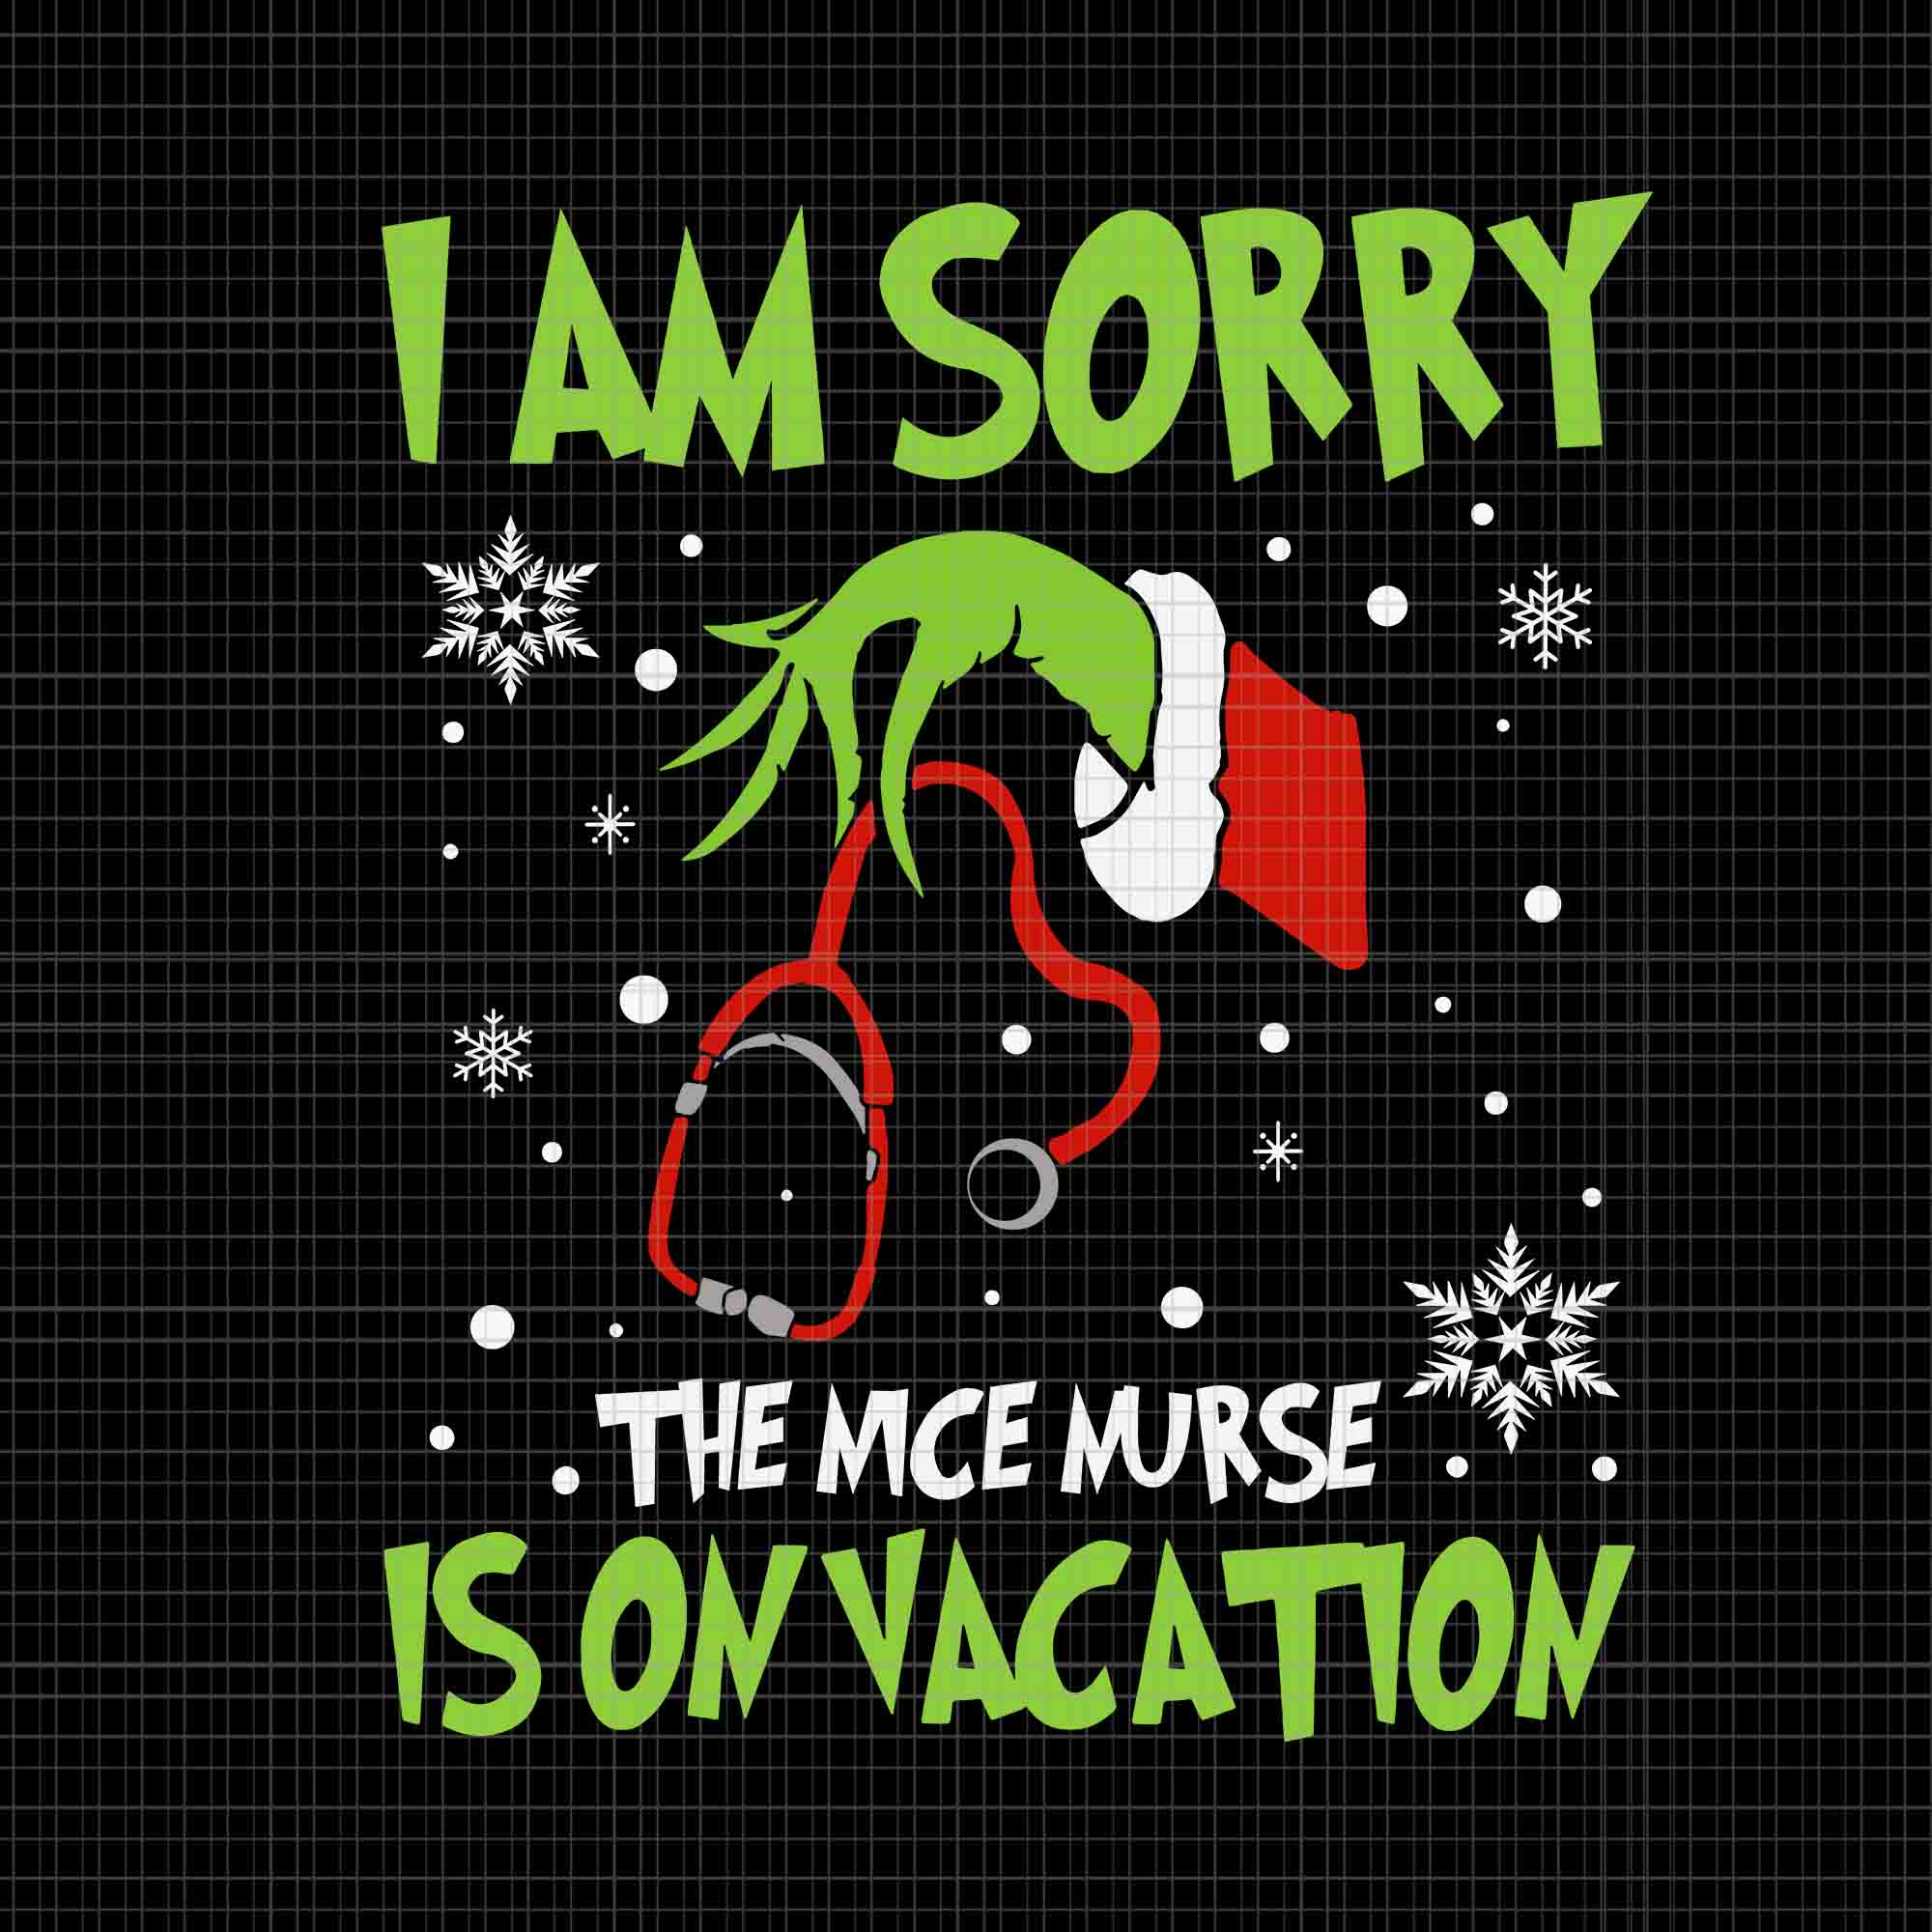 I Am Sorry The Nice Nurse Is On Vacation Svg, Nurse Christmas Svg, Grinch Christmas Svg